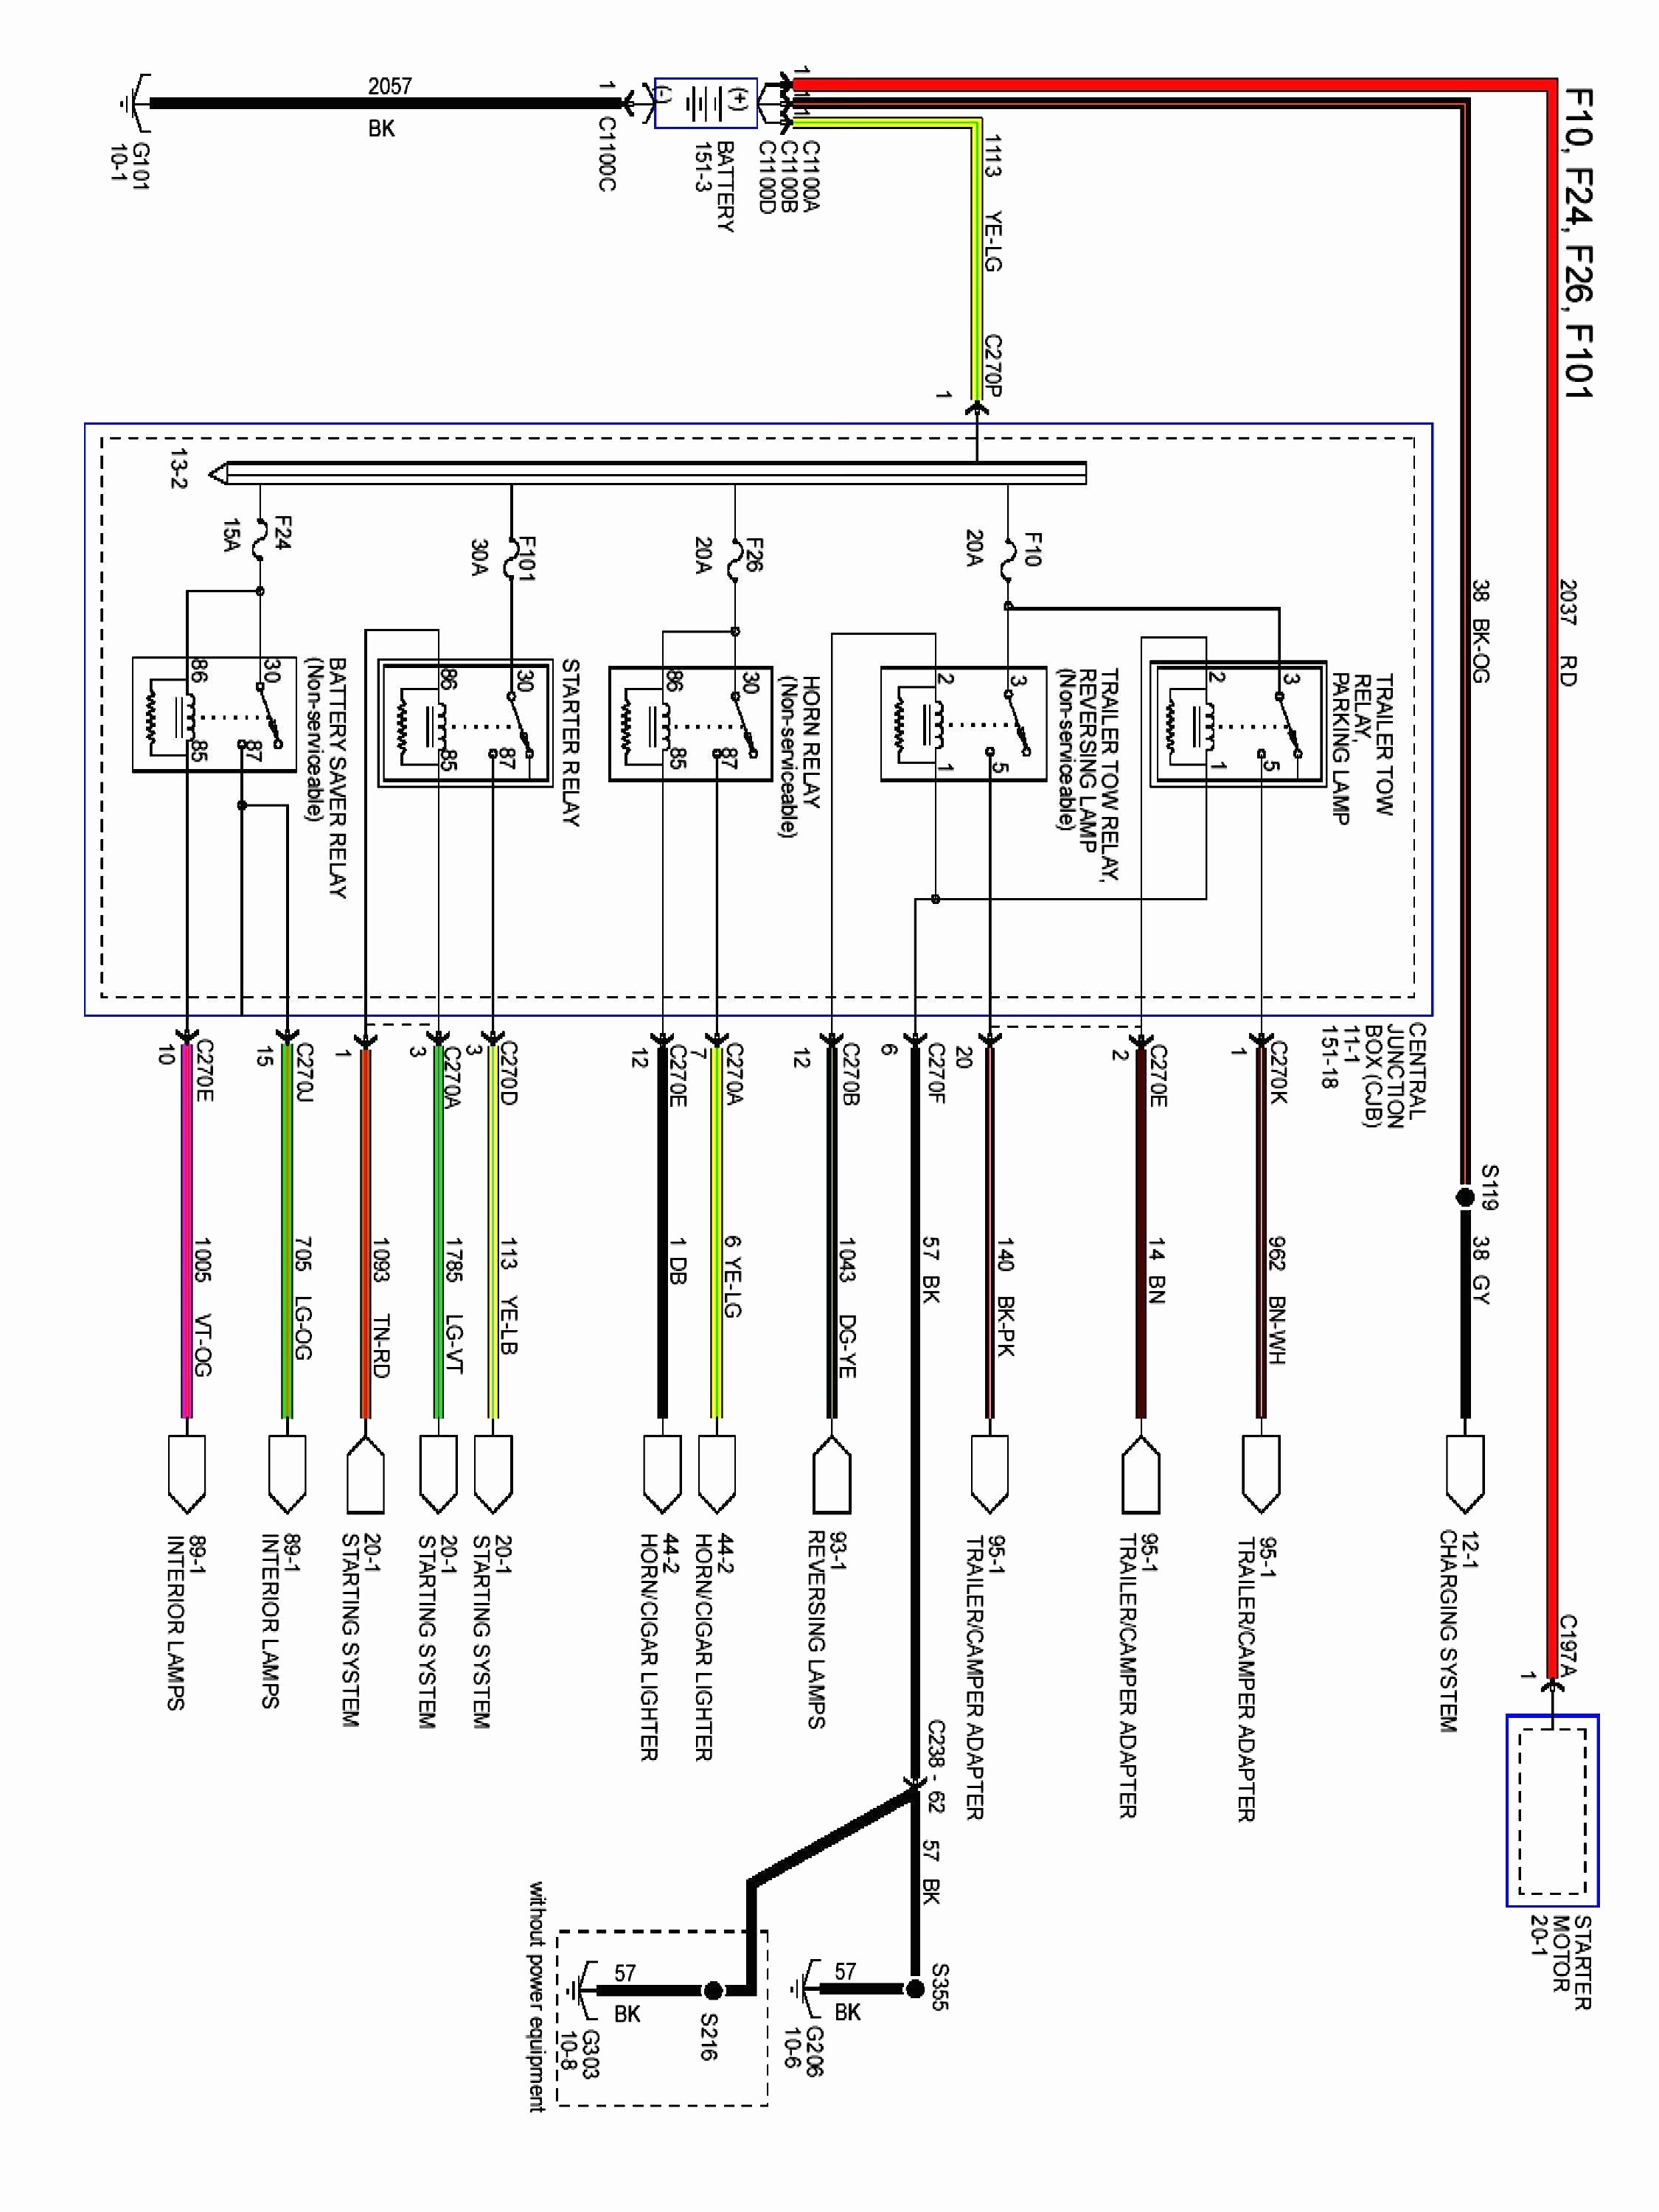 Ford F350 Parts Diagram 2001 F350 Wiring Diagram Blog Wiring Diagram Of Ford F350 Parts Diagram